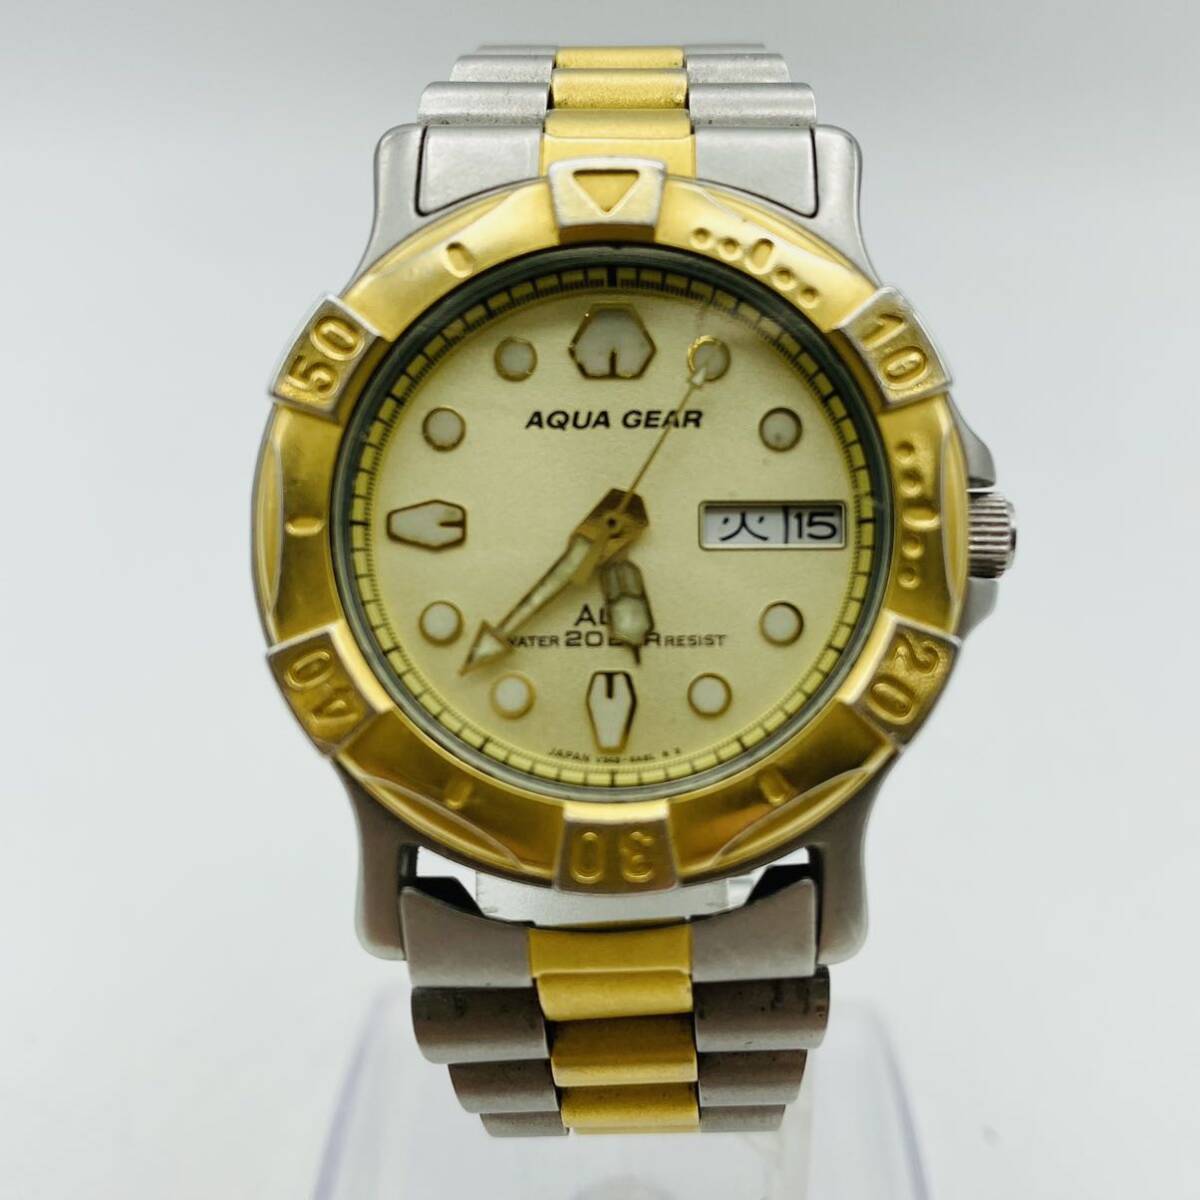 130 SEIKO ALBA セイコー アルバ 腕時計 時計 クオーツ クォーツ カレンダー付き 3針 AQUA GEAR アクアギア 121643 20BAR V348-6A50 AM_画像3